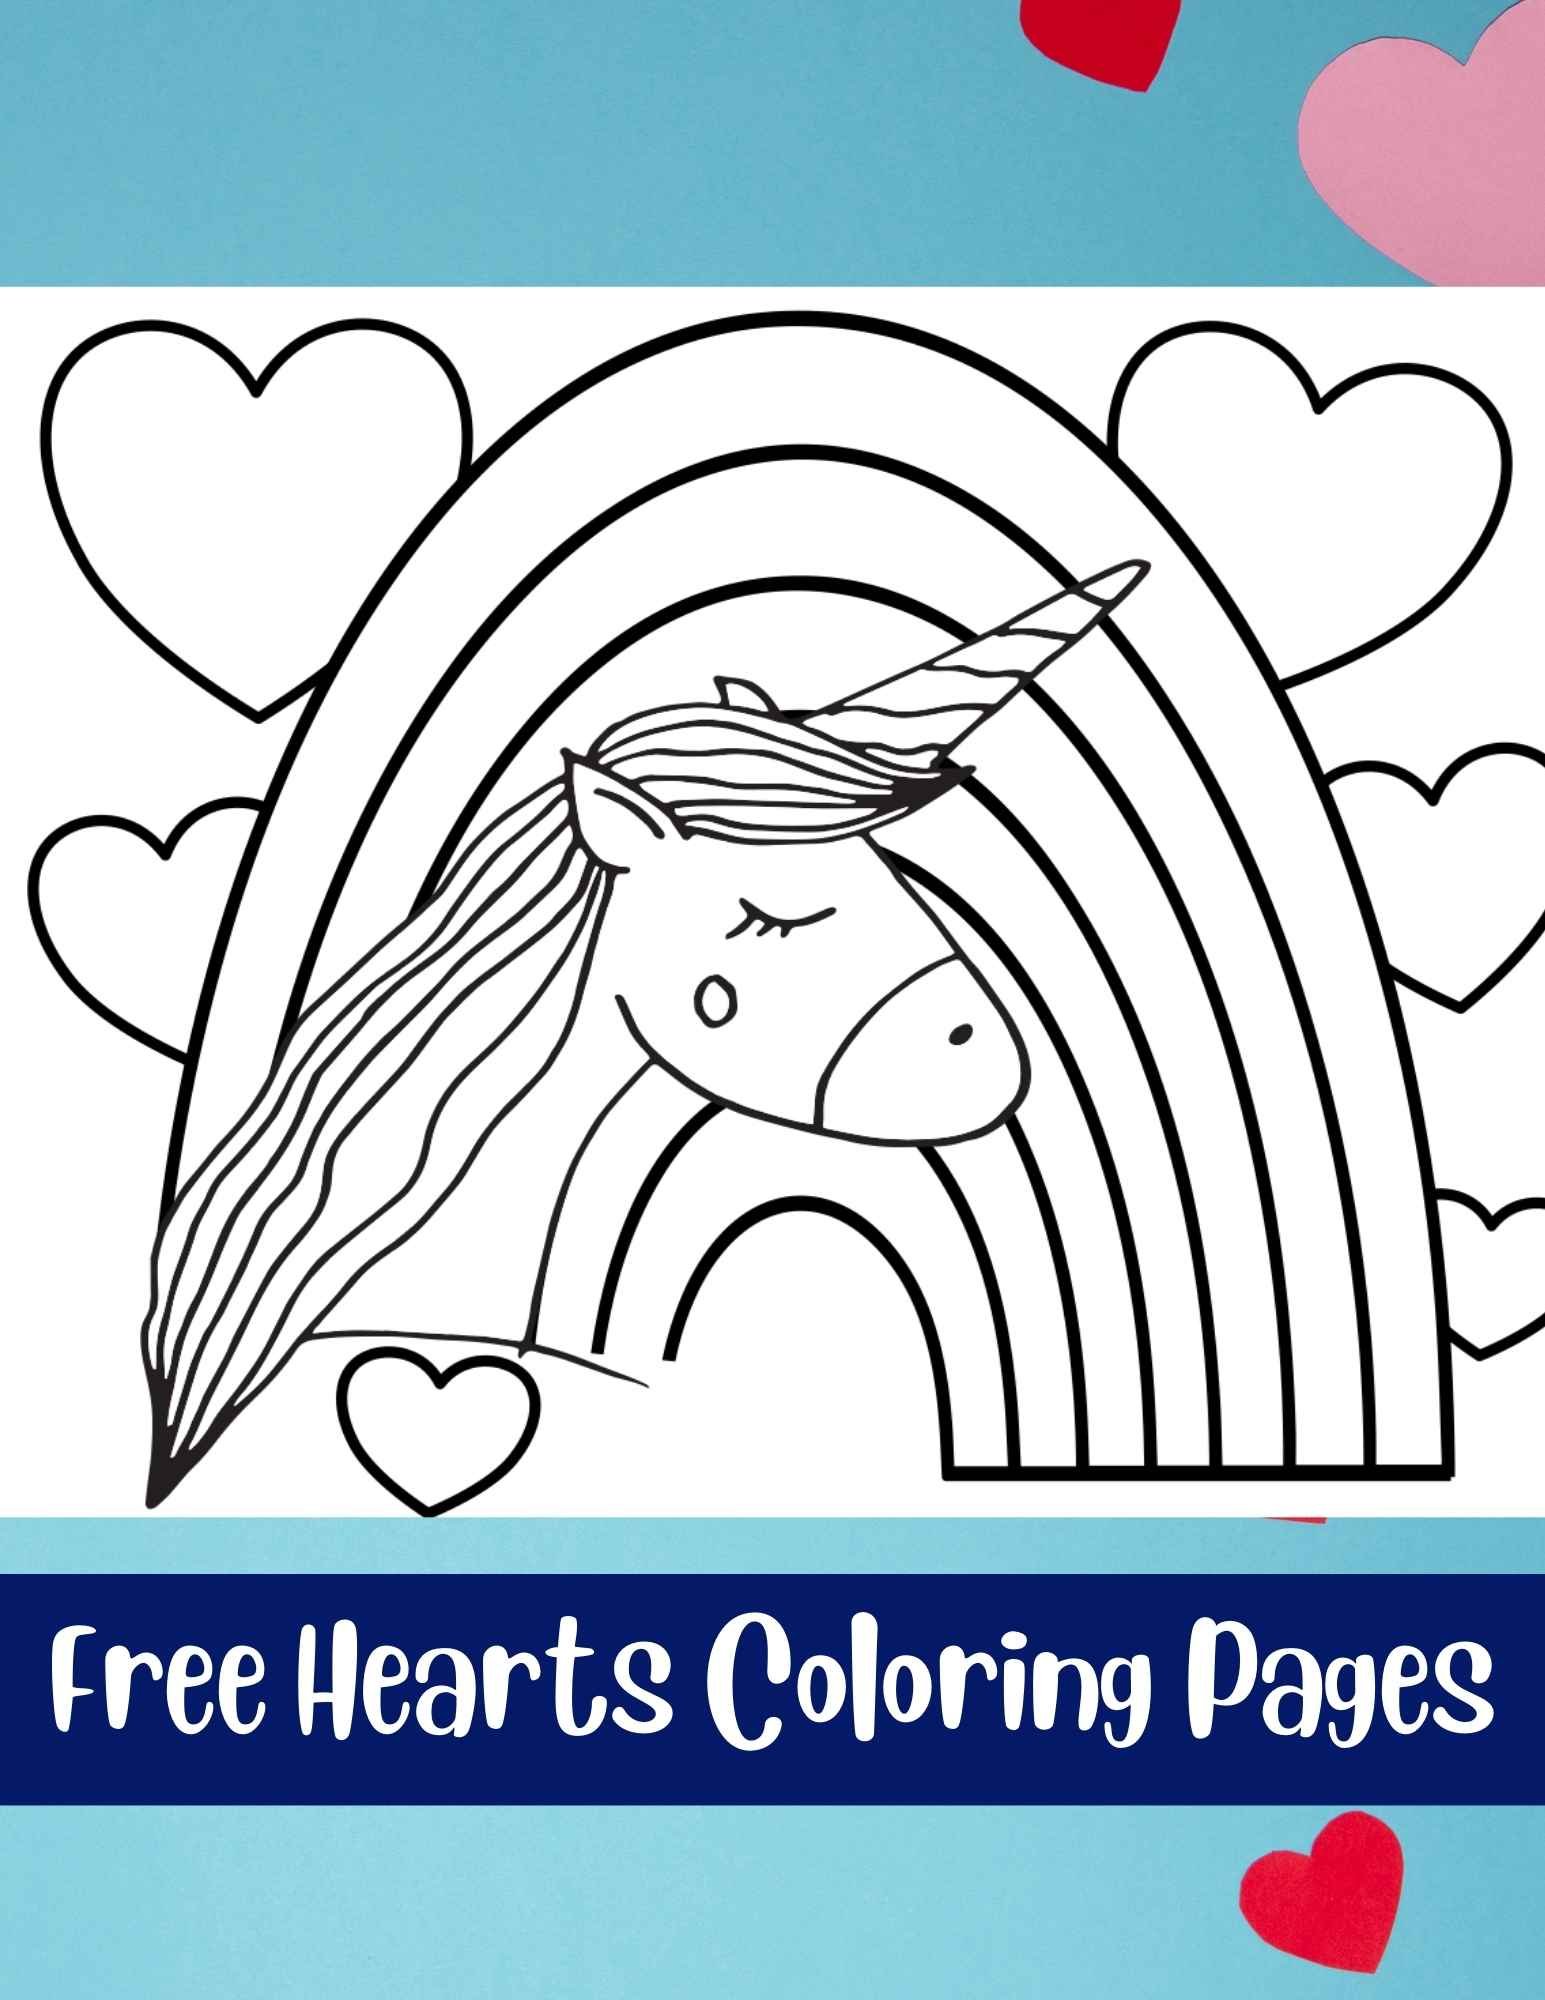 Free heart coloring pages â stevie doodles